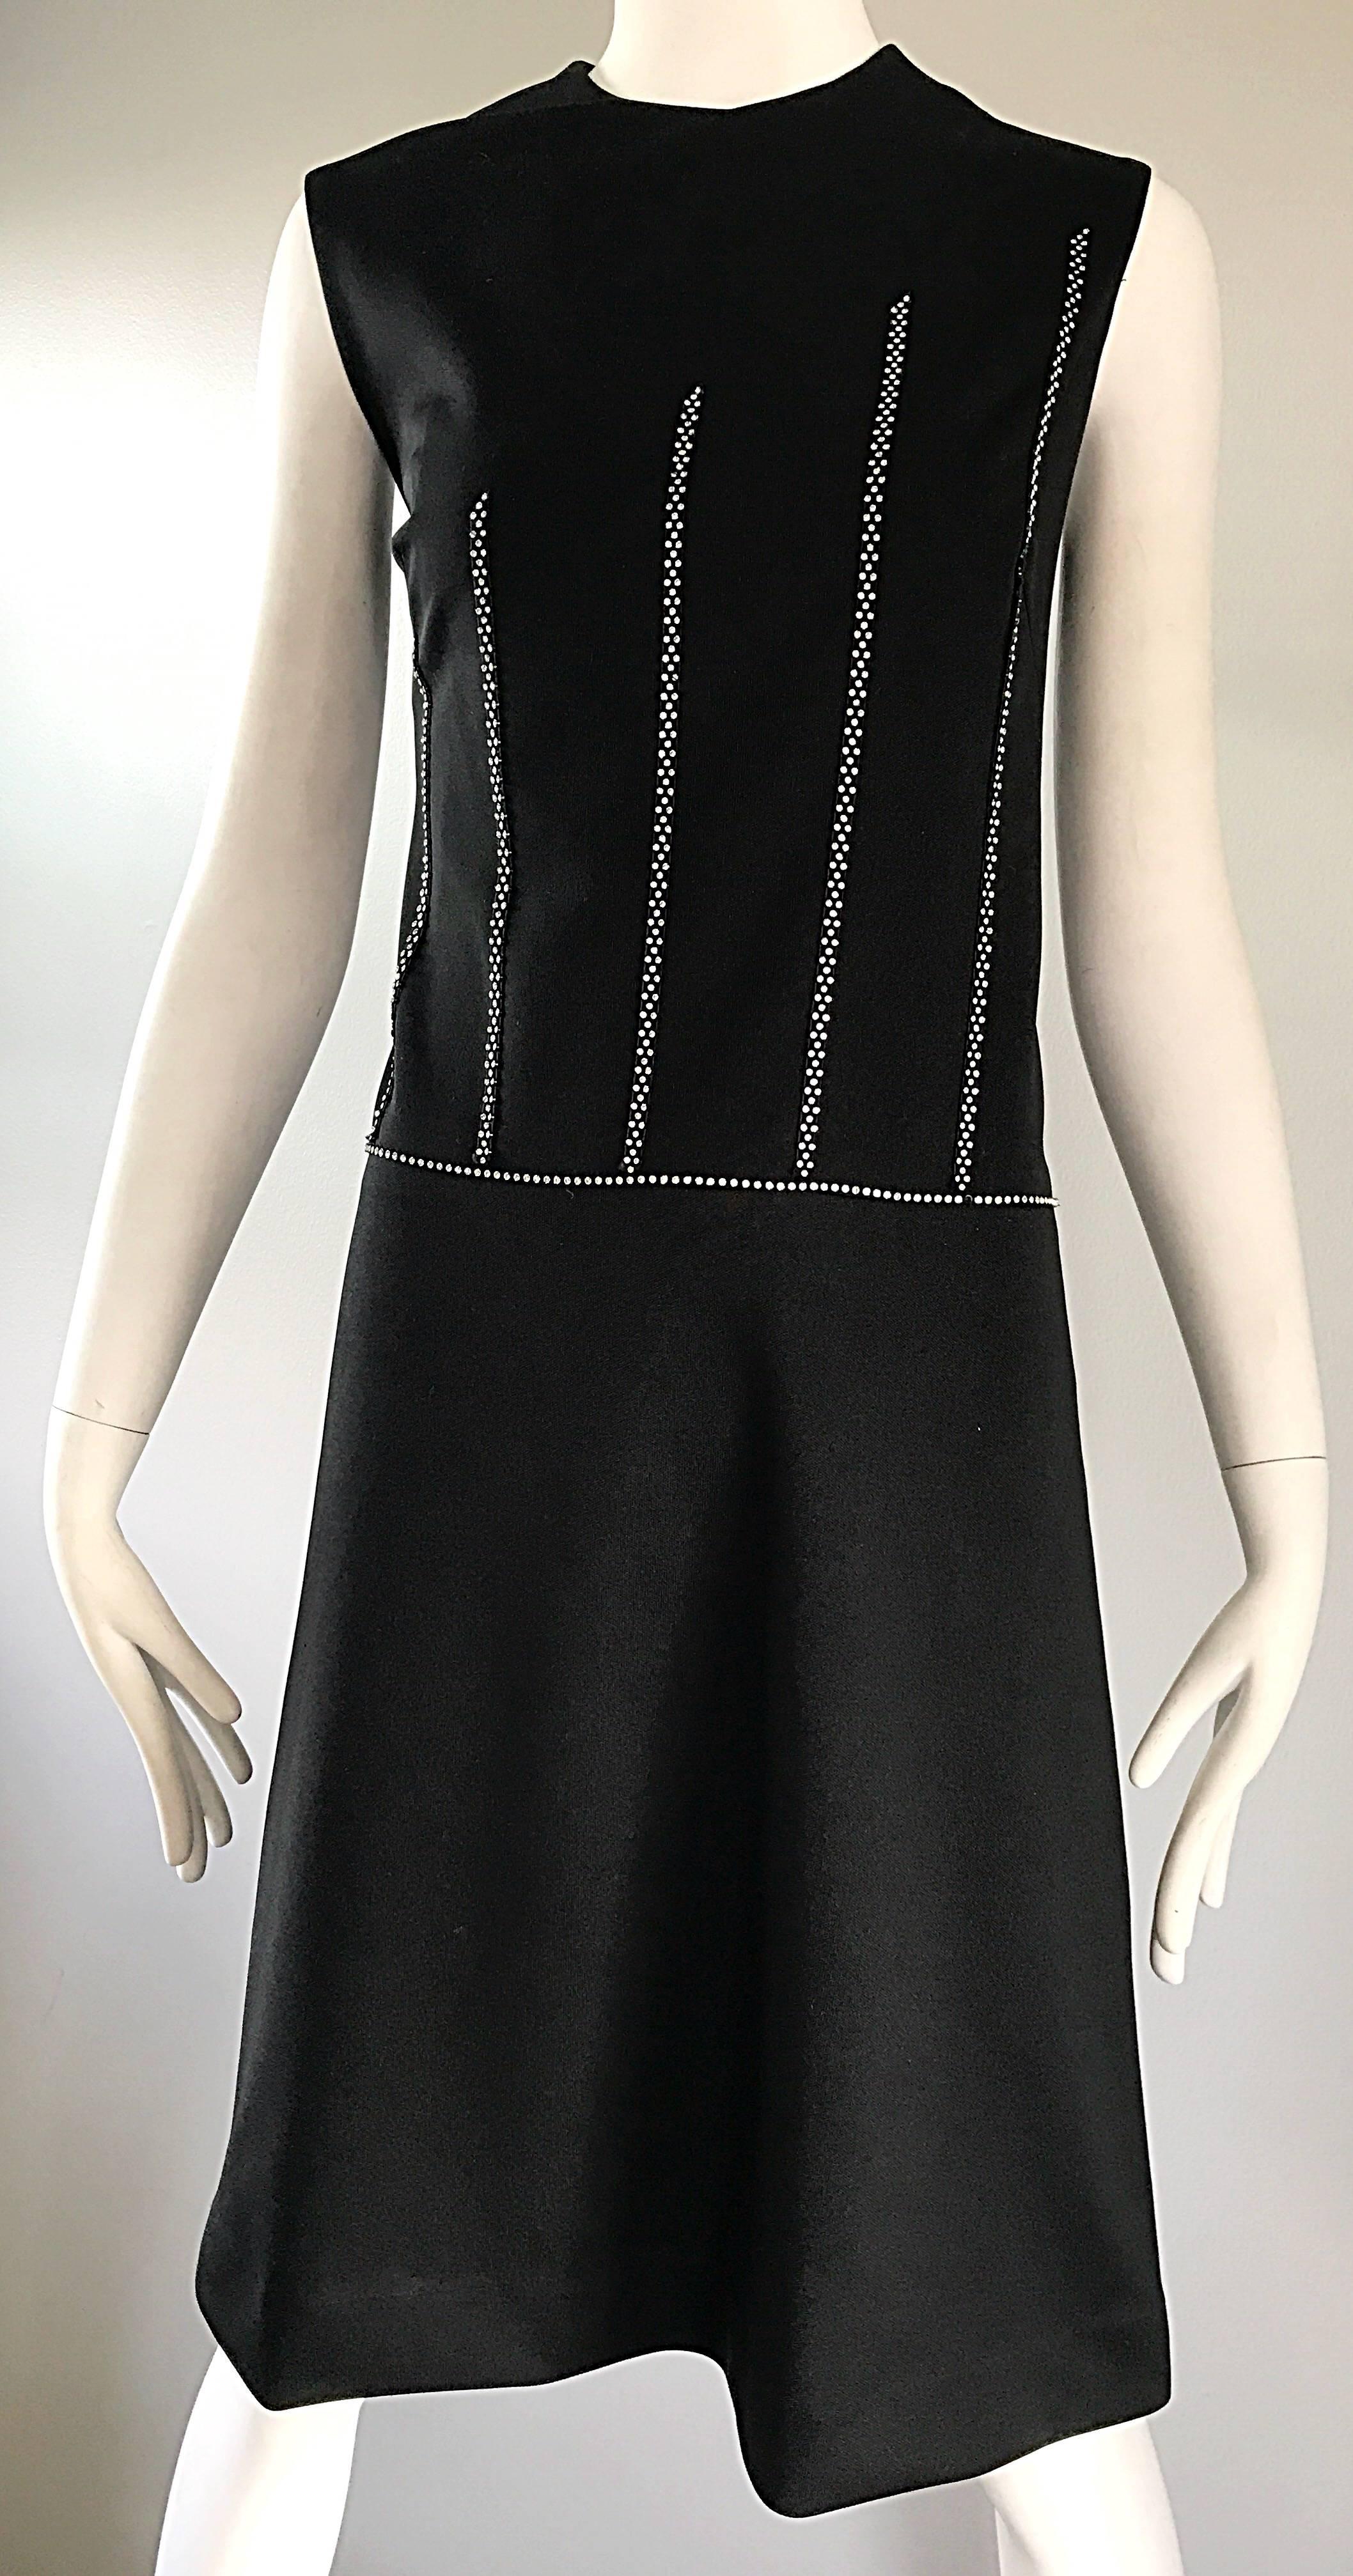 Women's Chic 1960s Italian Black Knit Rhinestone Vintage 60s Shift A - Line Mod Dress For Sale